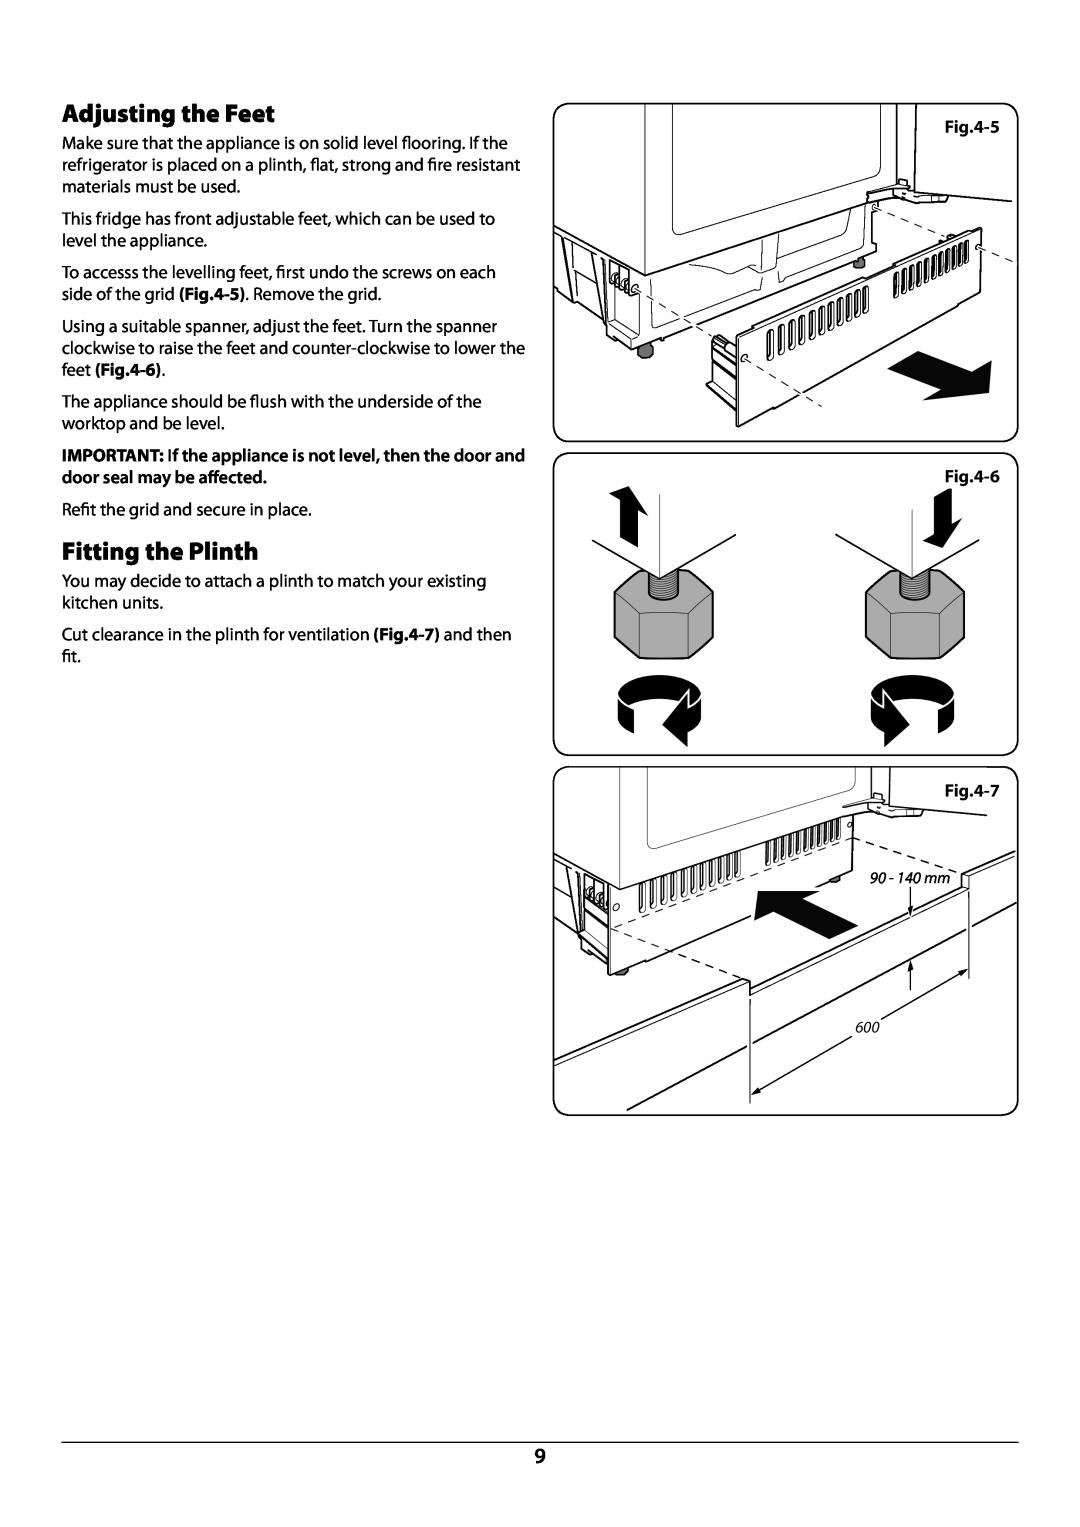 Rangemaster U110120 - 01A manual Adjusting the Feet, Fitting the Plinth, 5 -6, 7 